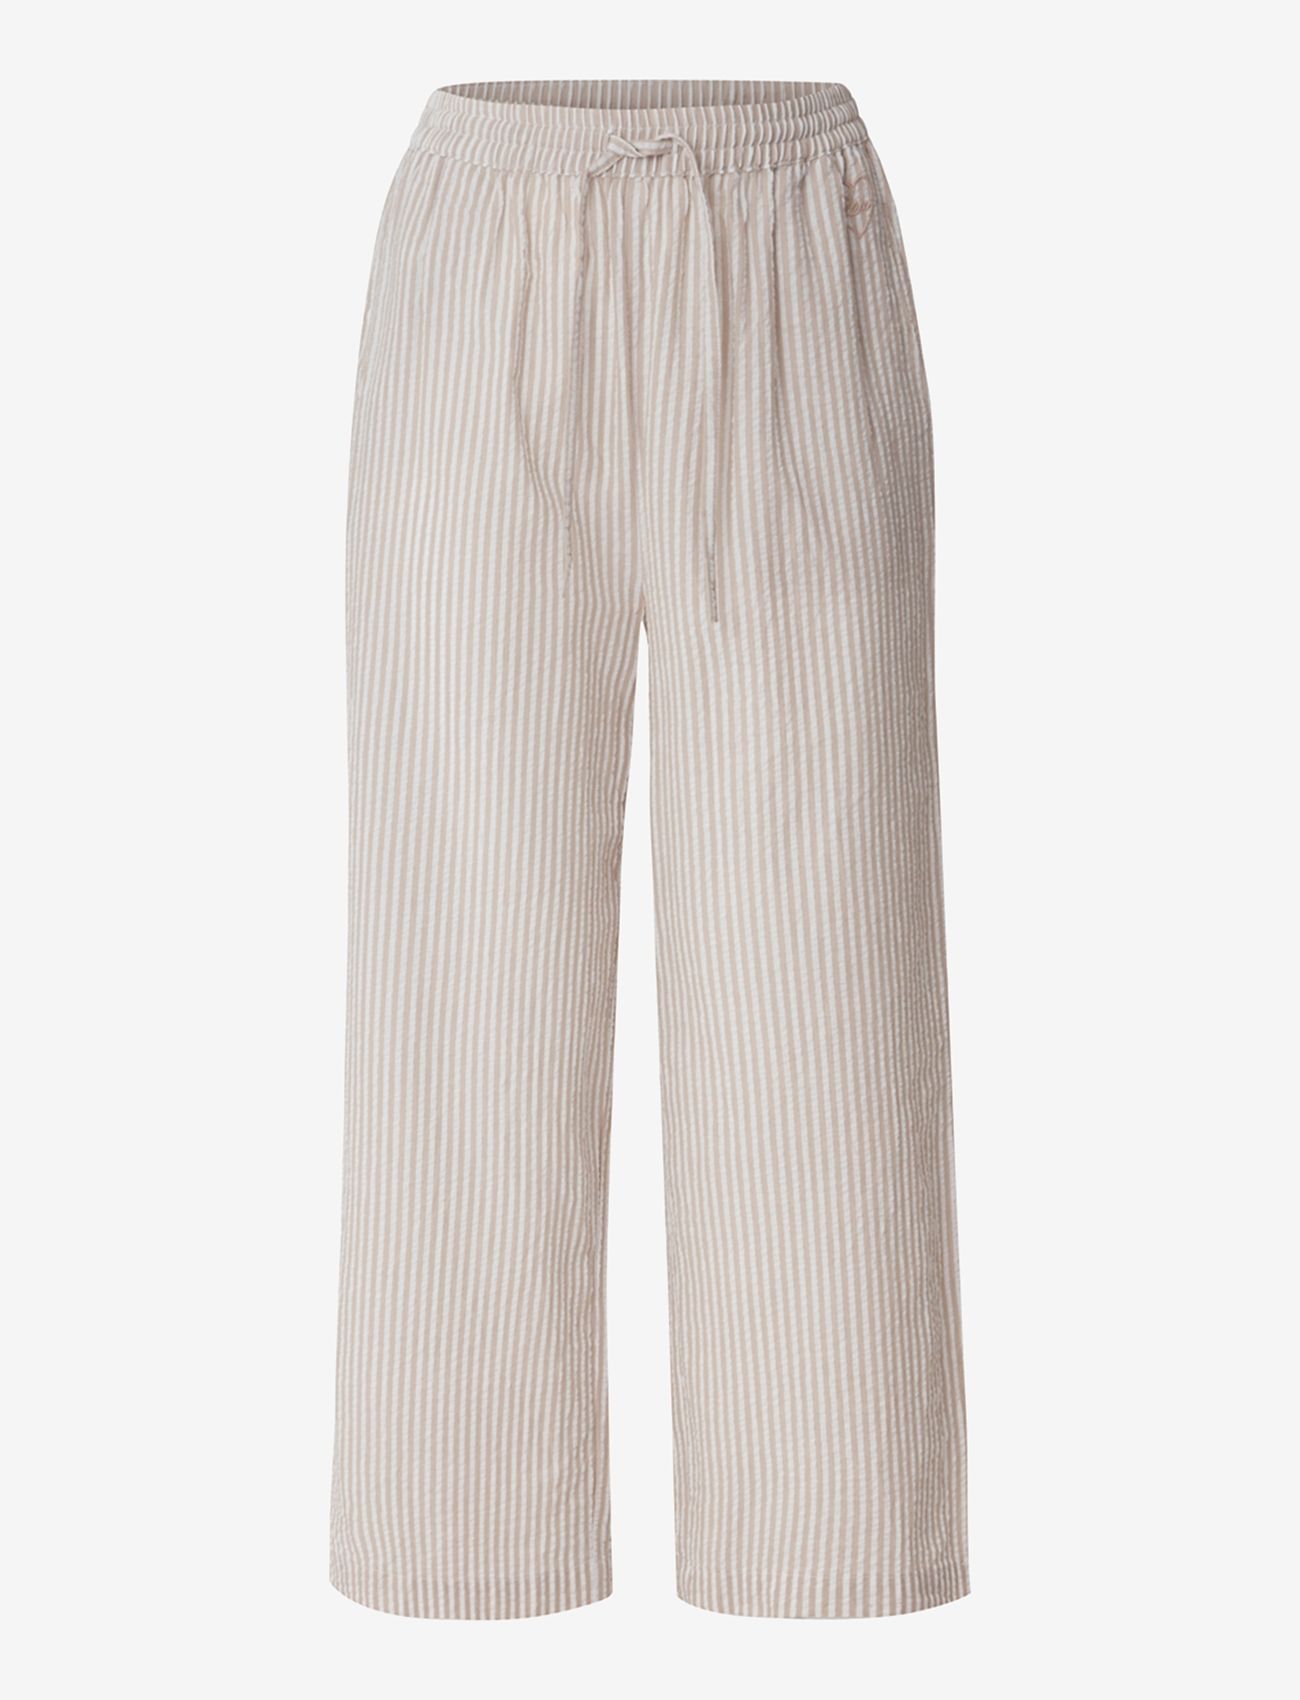 Lexington Home - Lauren Organic Cotton Seersucker Pajama Set - beige/white - 1